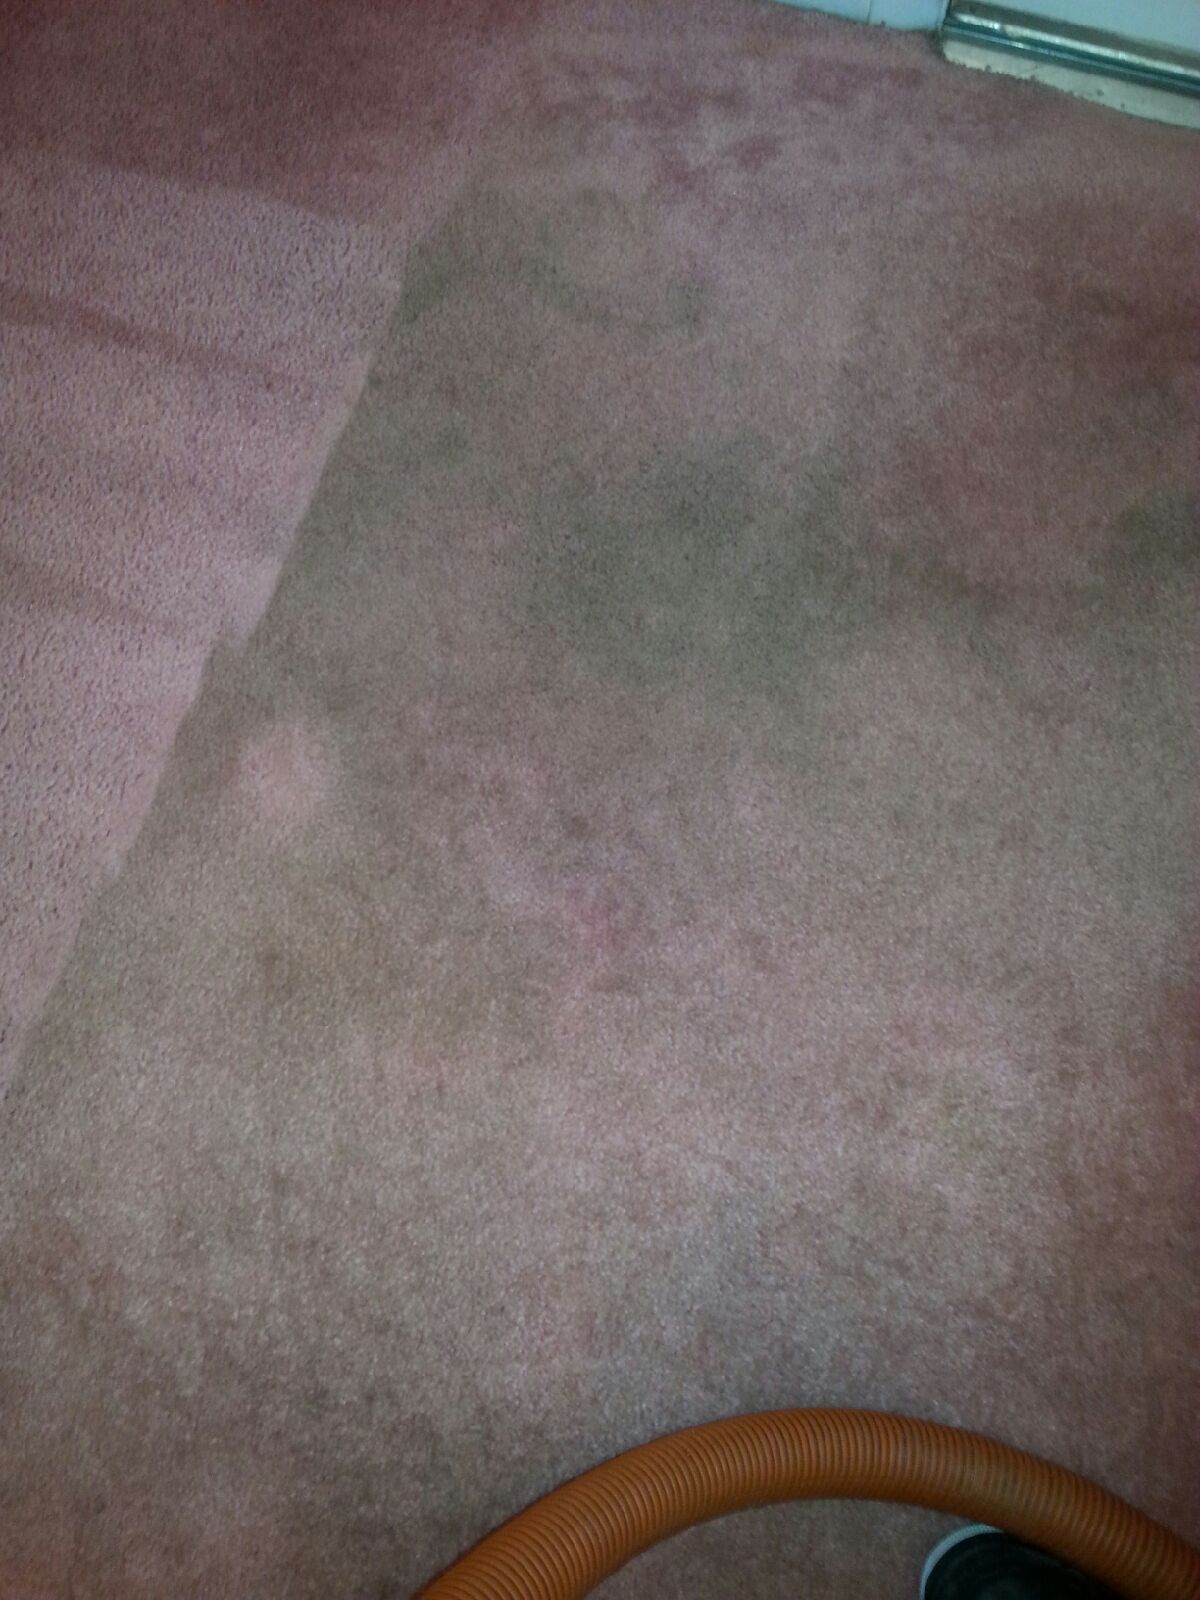 Mullica Hill Carpet Cleaning. Keep A Germ Free Carpet